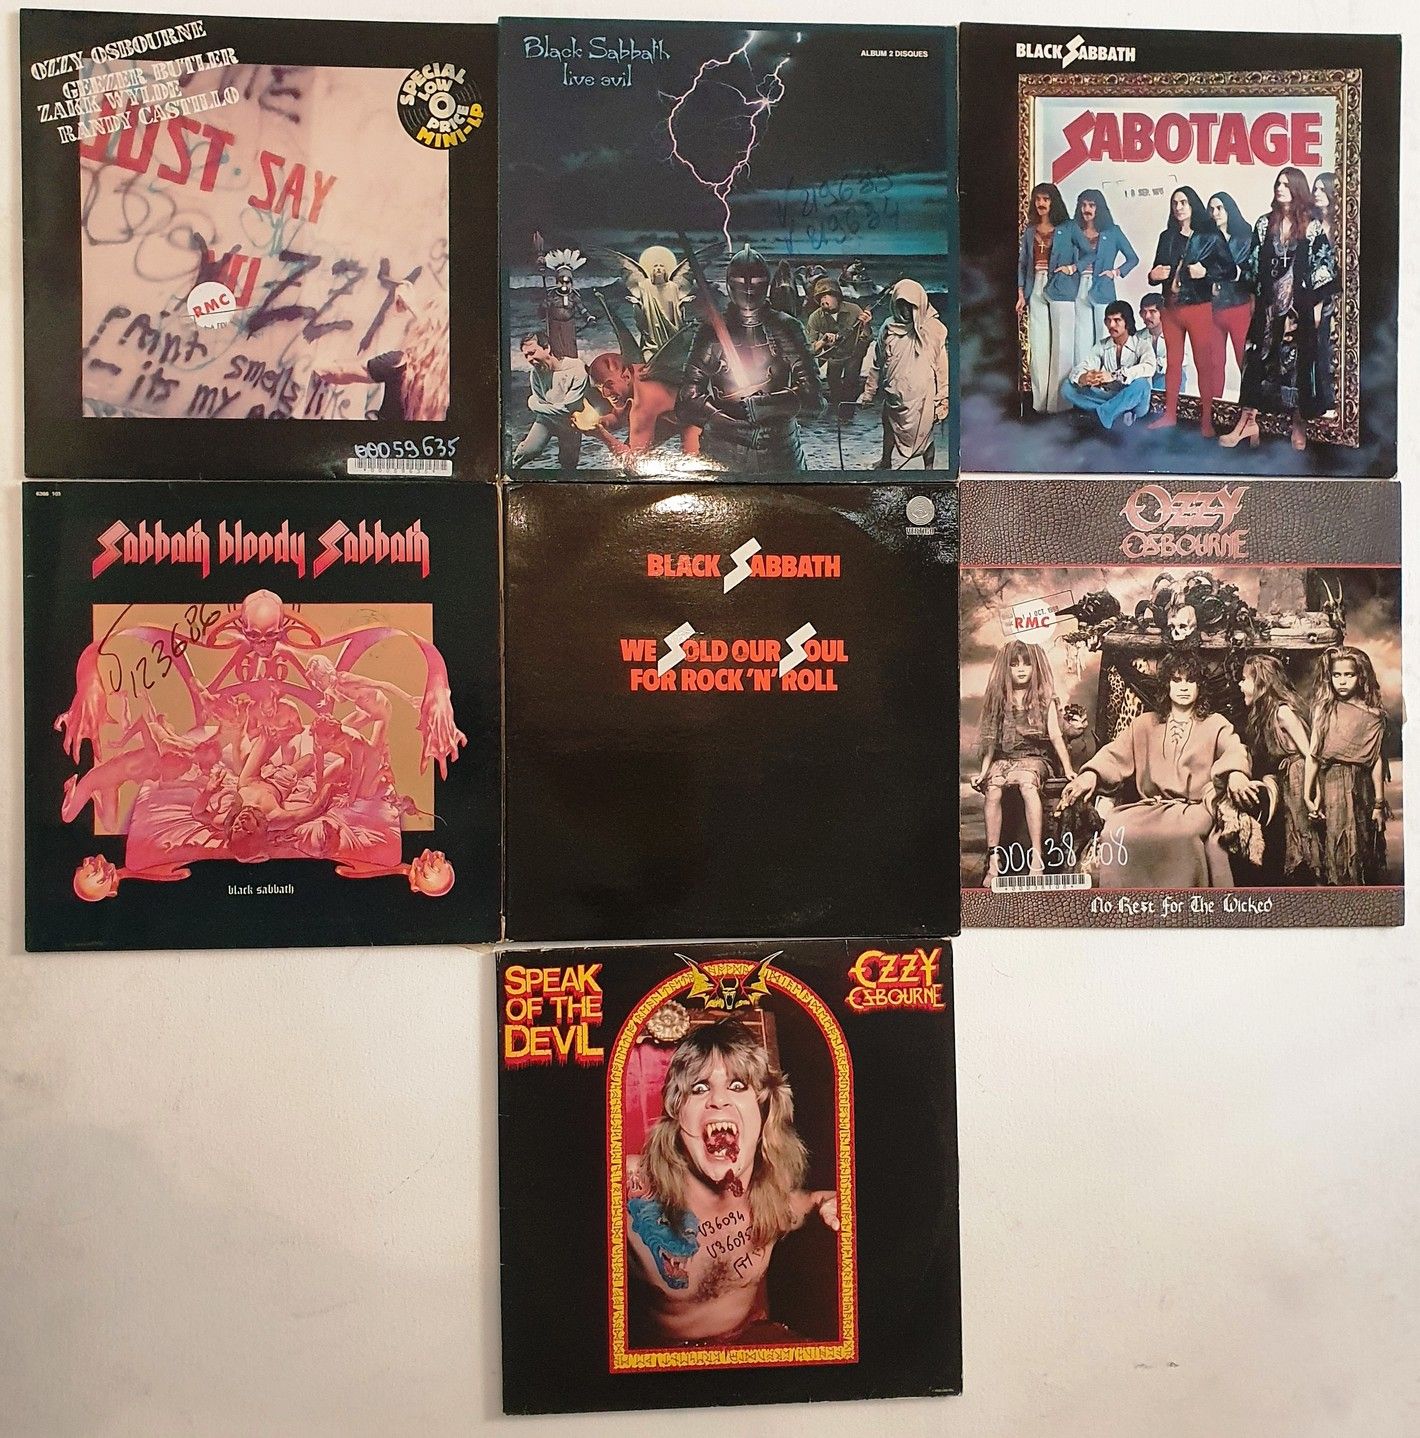 Hard Rock Sept disques 33T - Black Sabbath/Ozzy Osbourne
VG à VG+; VG à EX